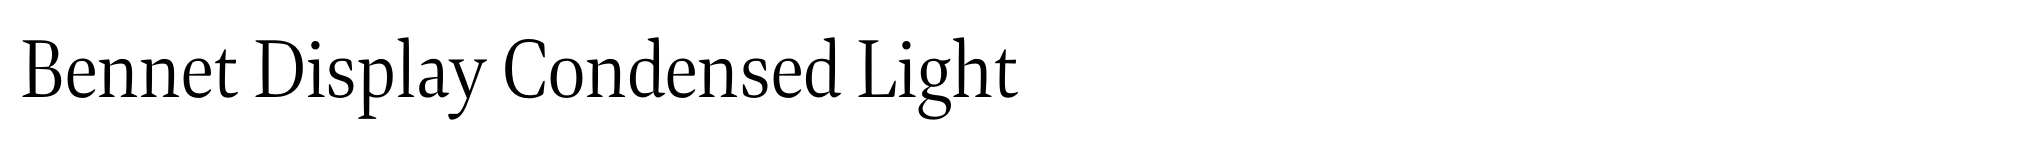 Bennet Display Condensed Light image